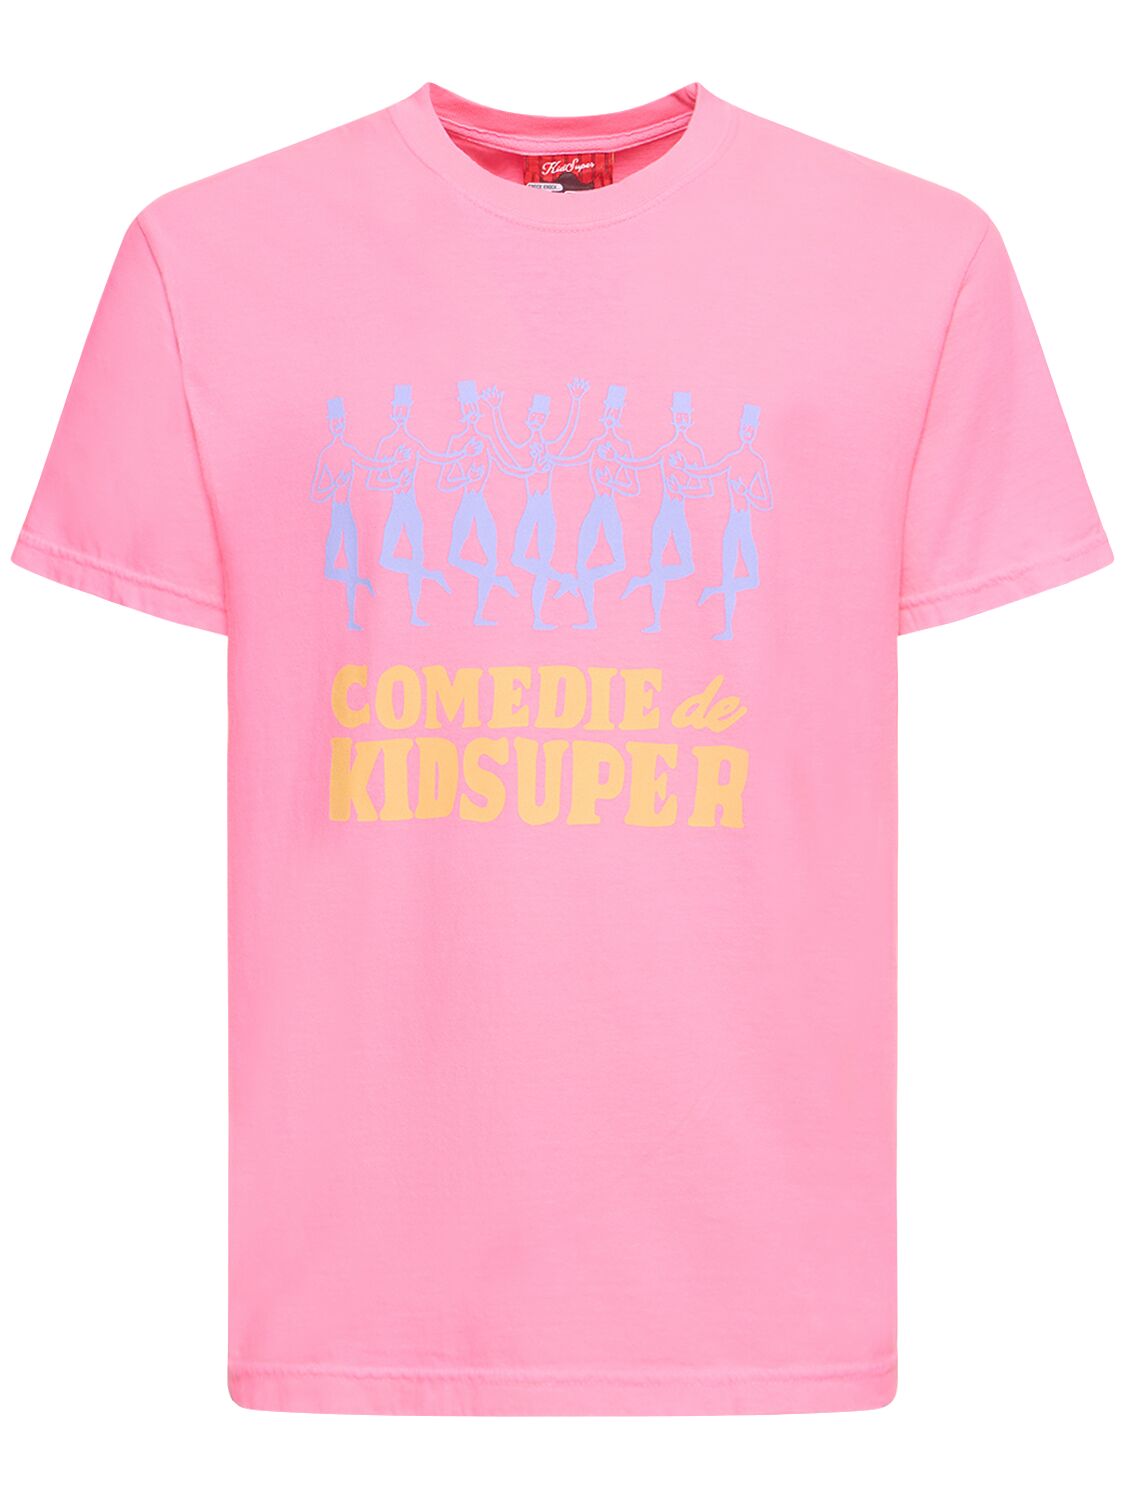 Kidsuper Comedie De  Cotton T-shirt In Fuchsia